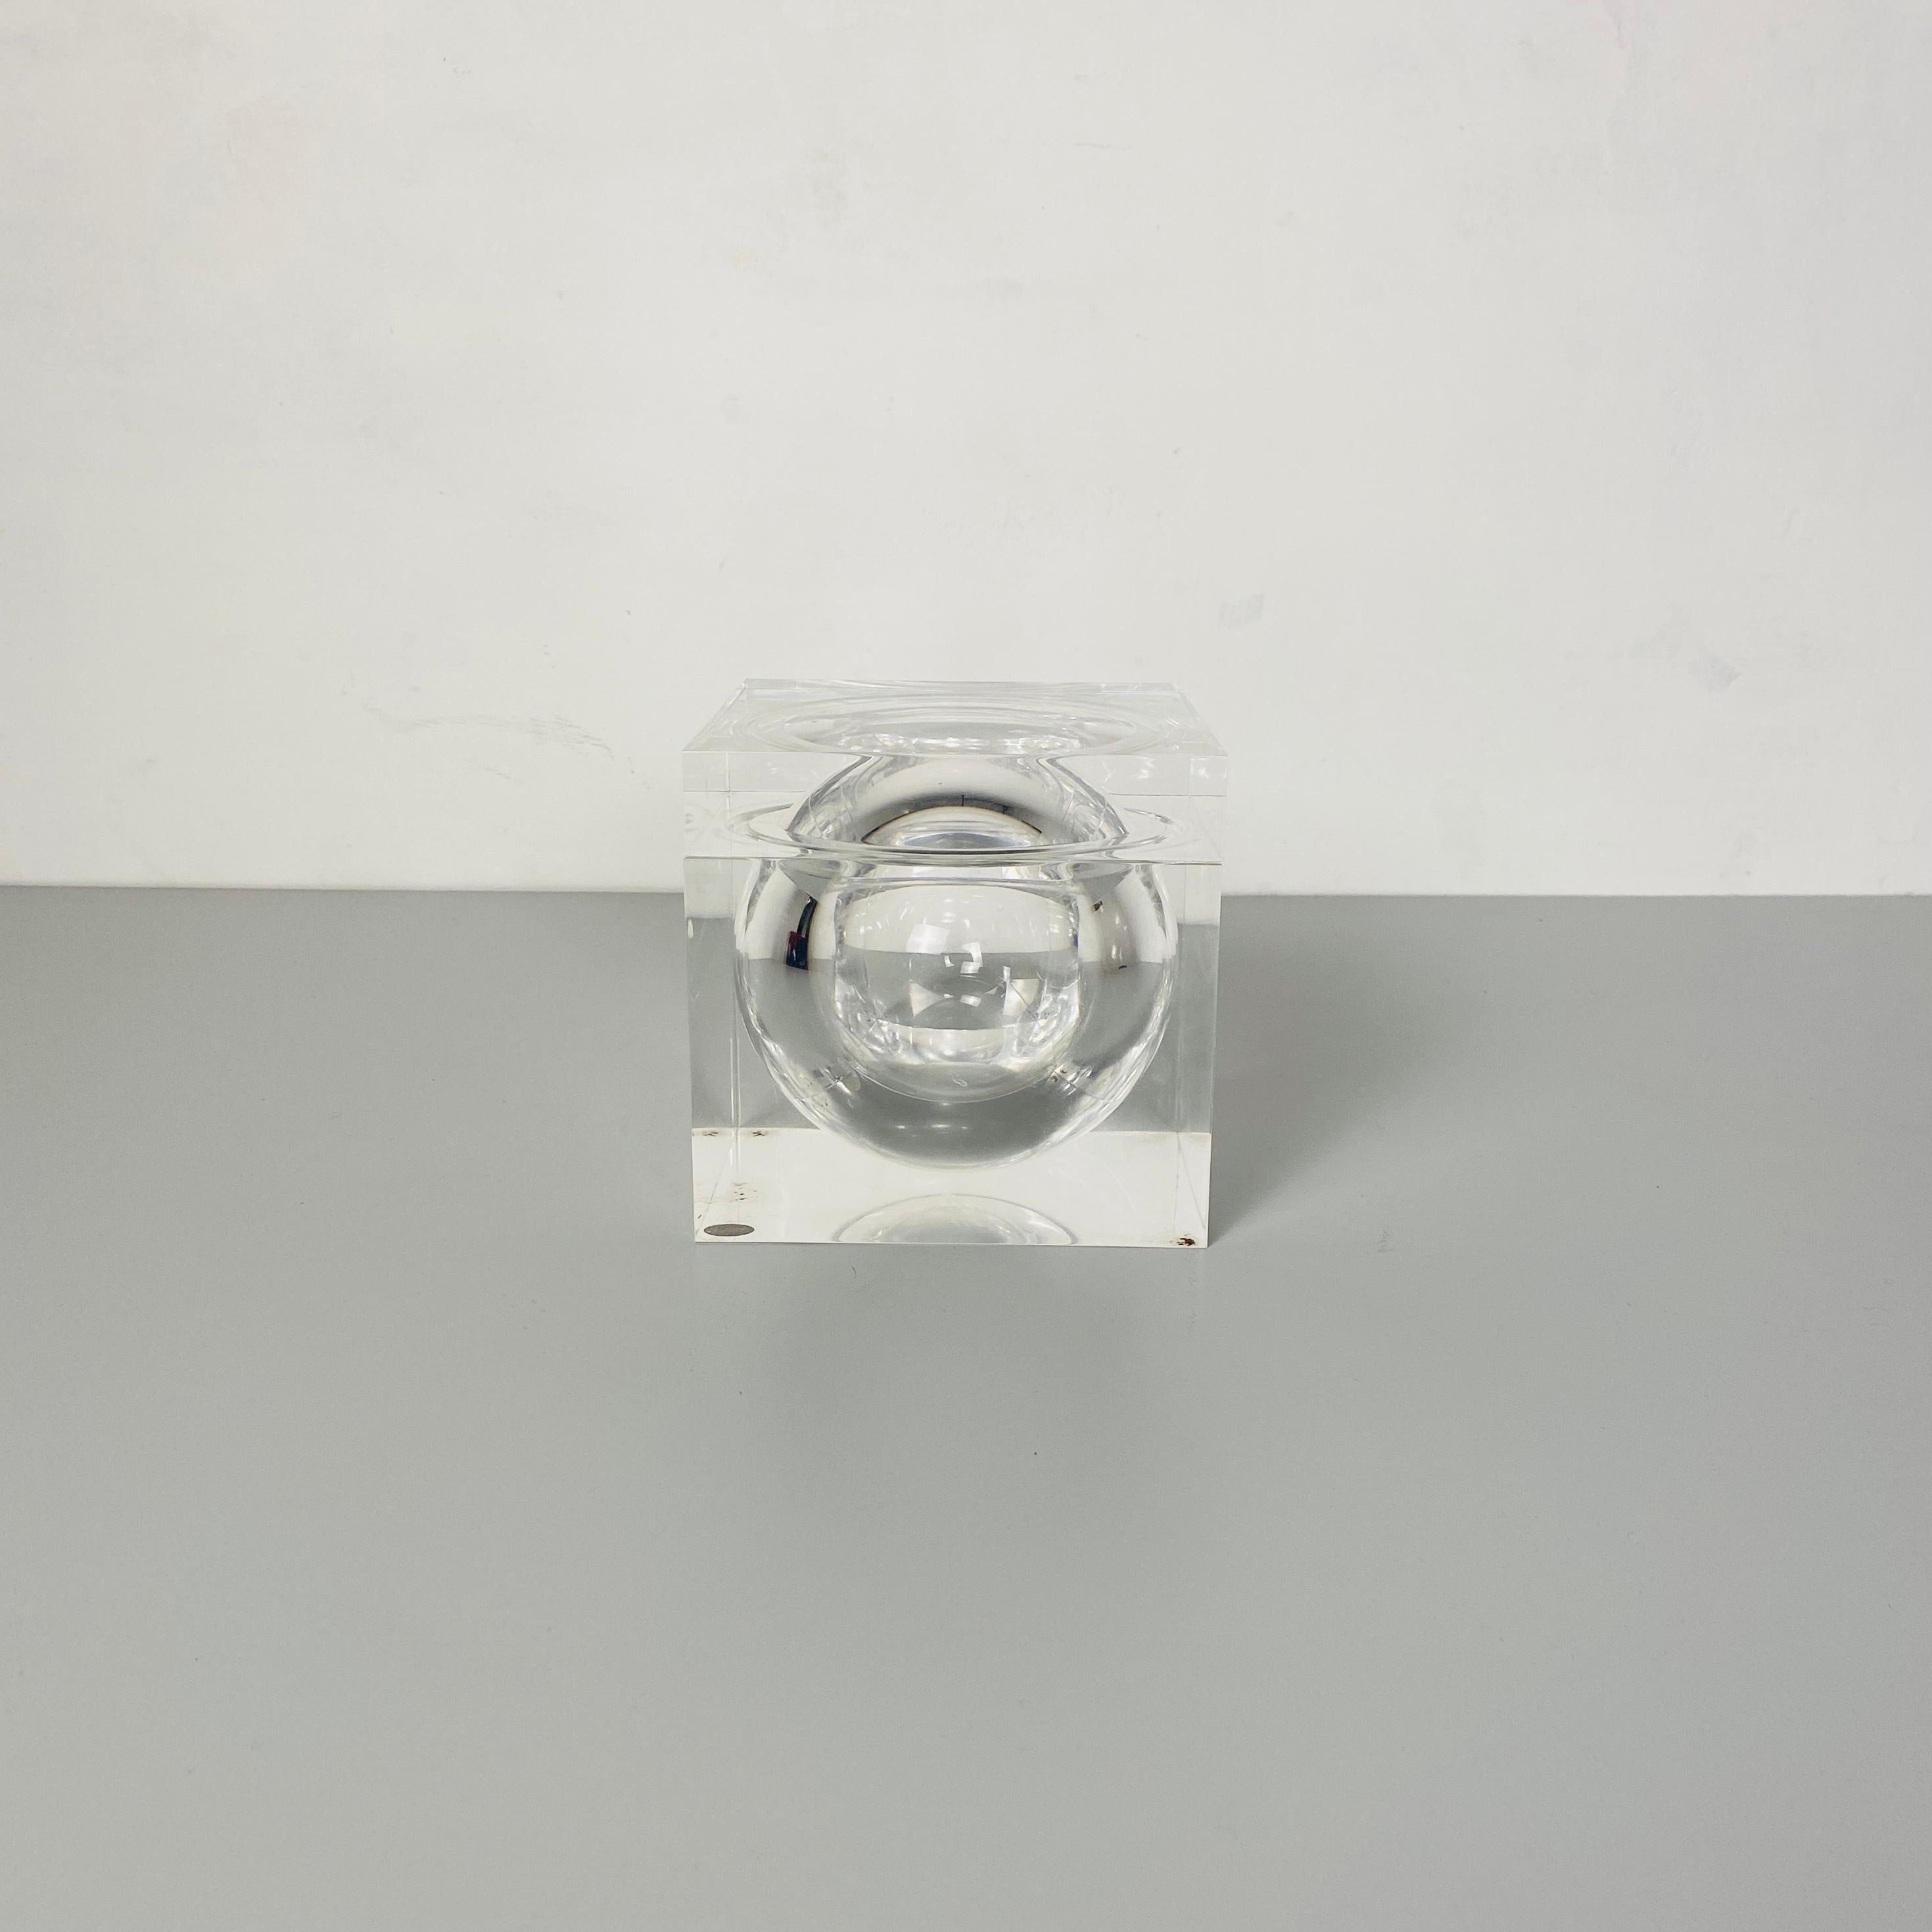 Italian Mid-Century Modern plexiglass square box with internal ice bucket sphere by Guzzini, 1970s
Square box with internal ice bucket sphere in transparent plexiglass.

excellent condition

Measures: 14.5 x 15 x 14.5 H cm.